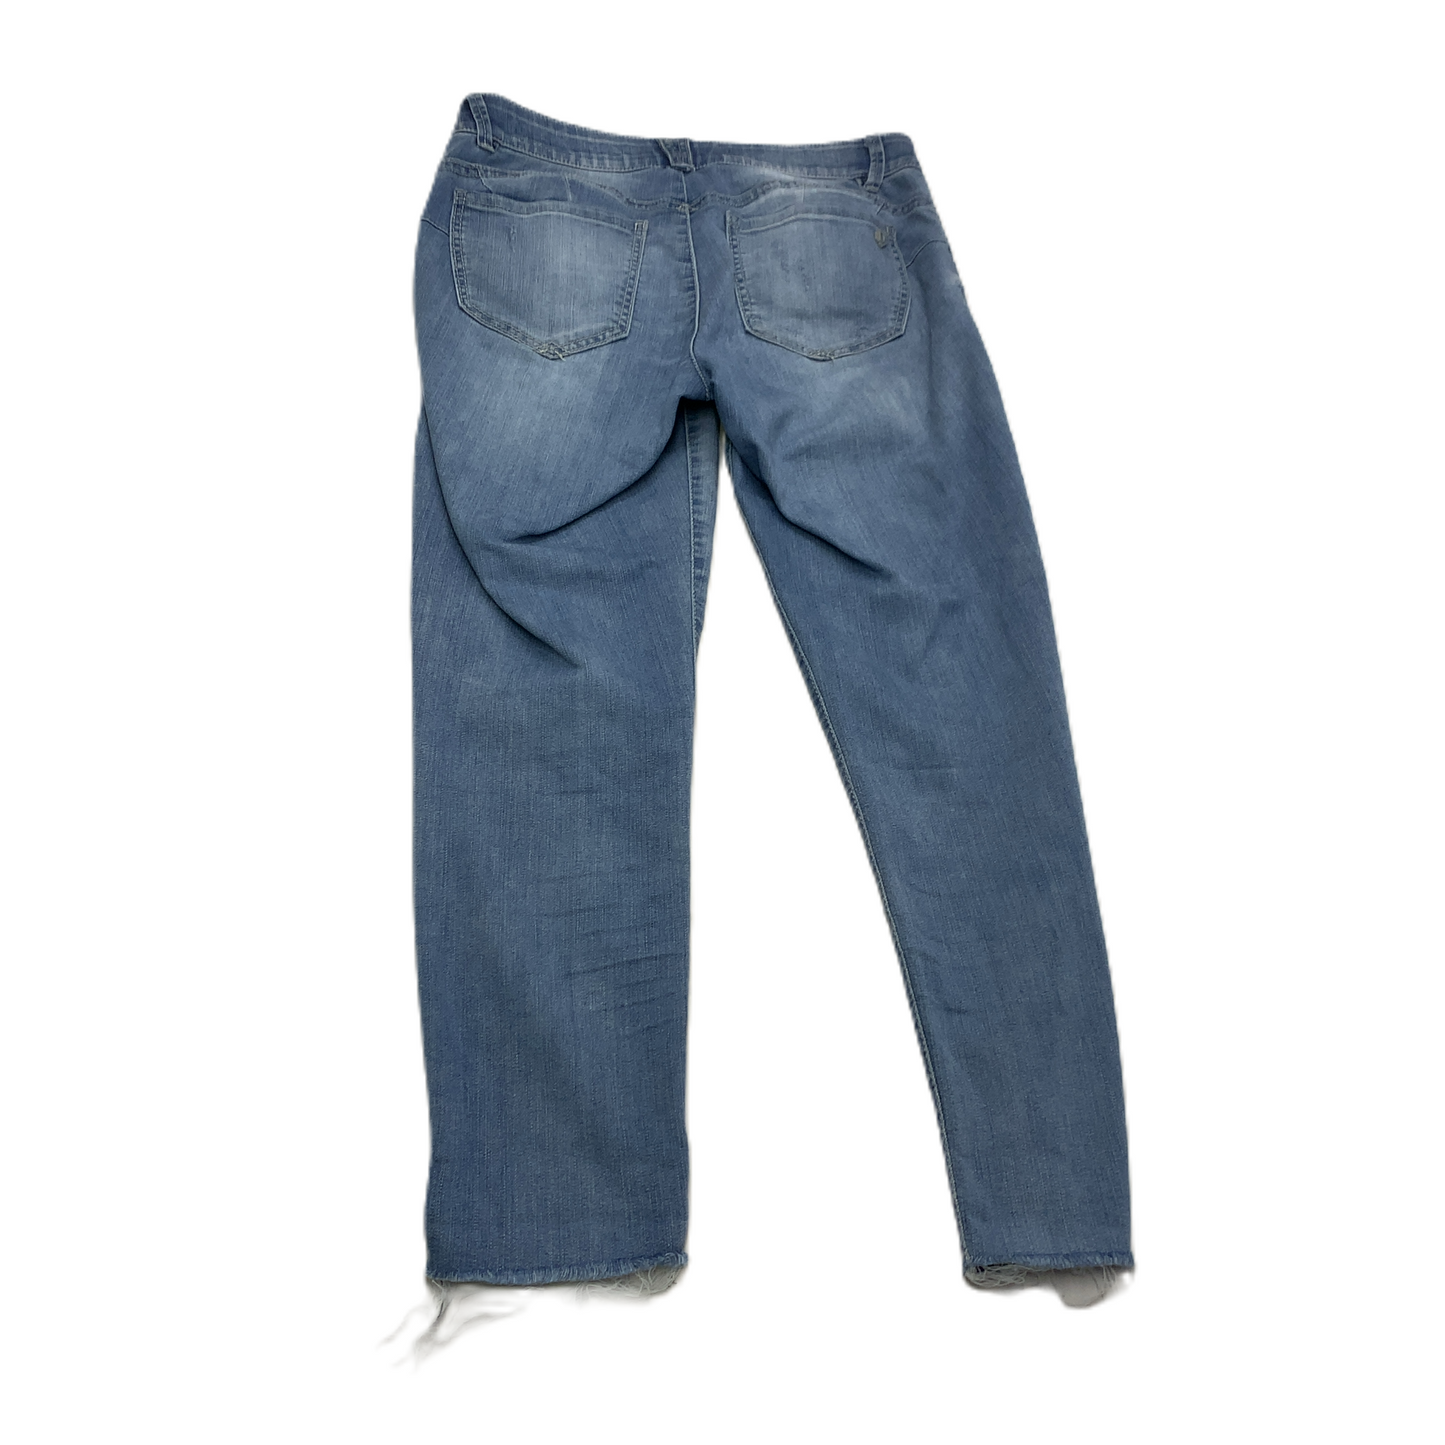 Jeans Skinny By Democracy  Size: 6petite